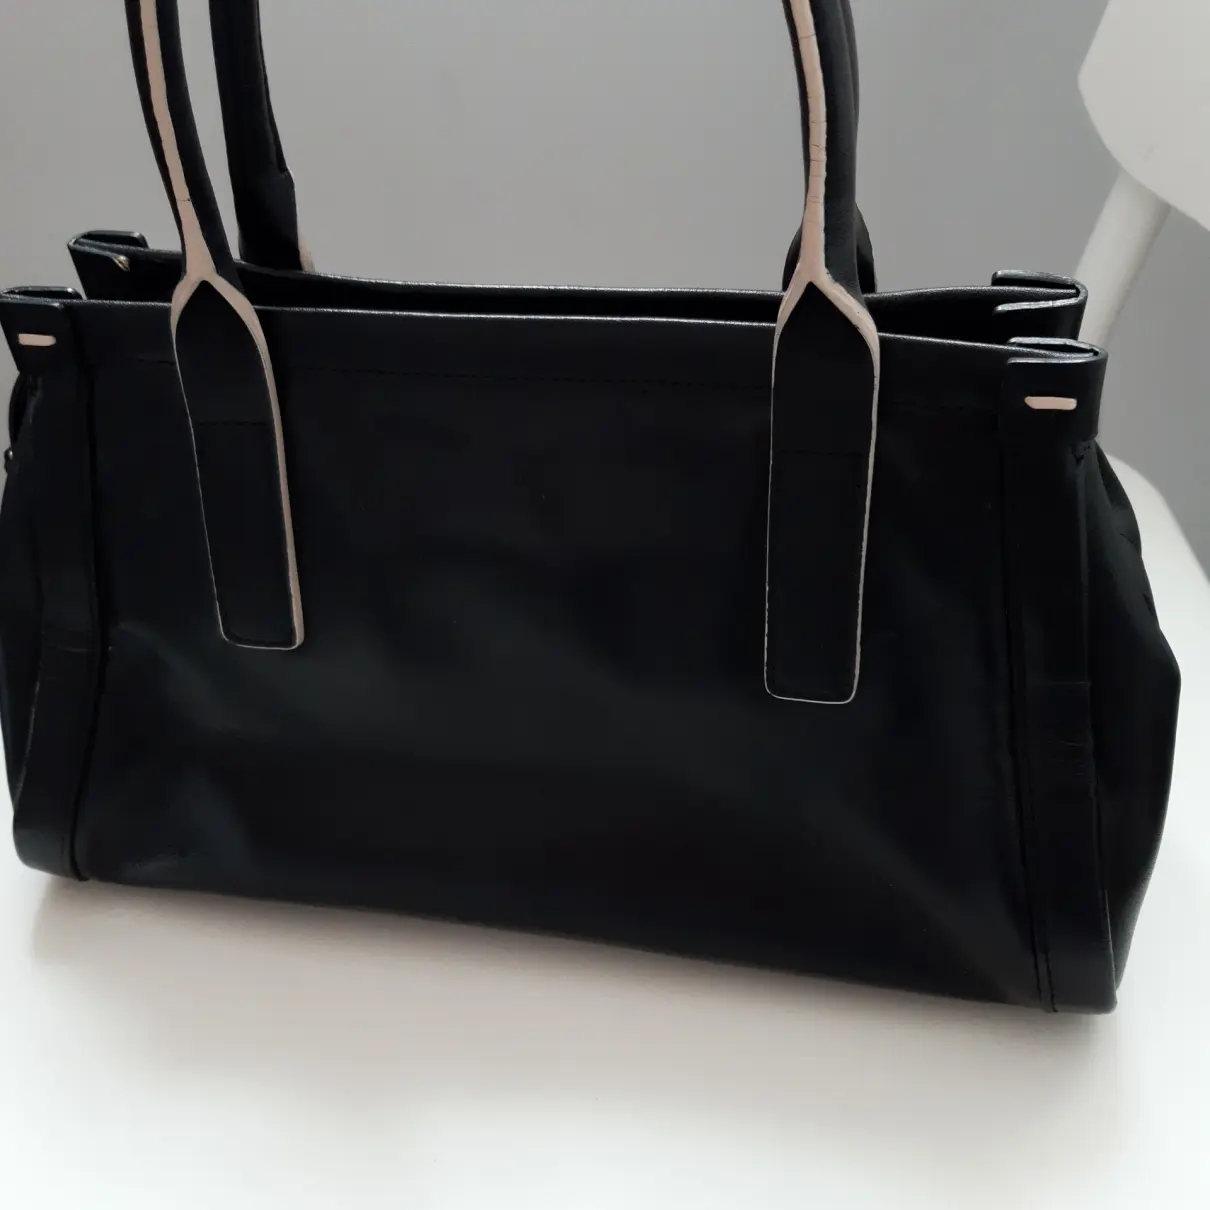 Buy Radley London Leather handbag online